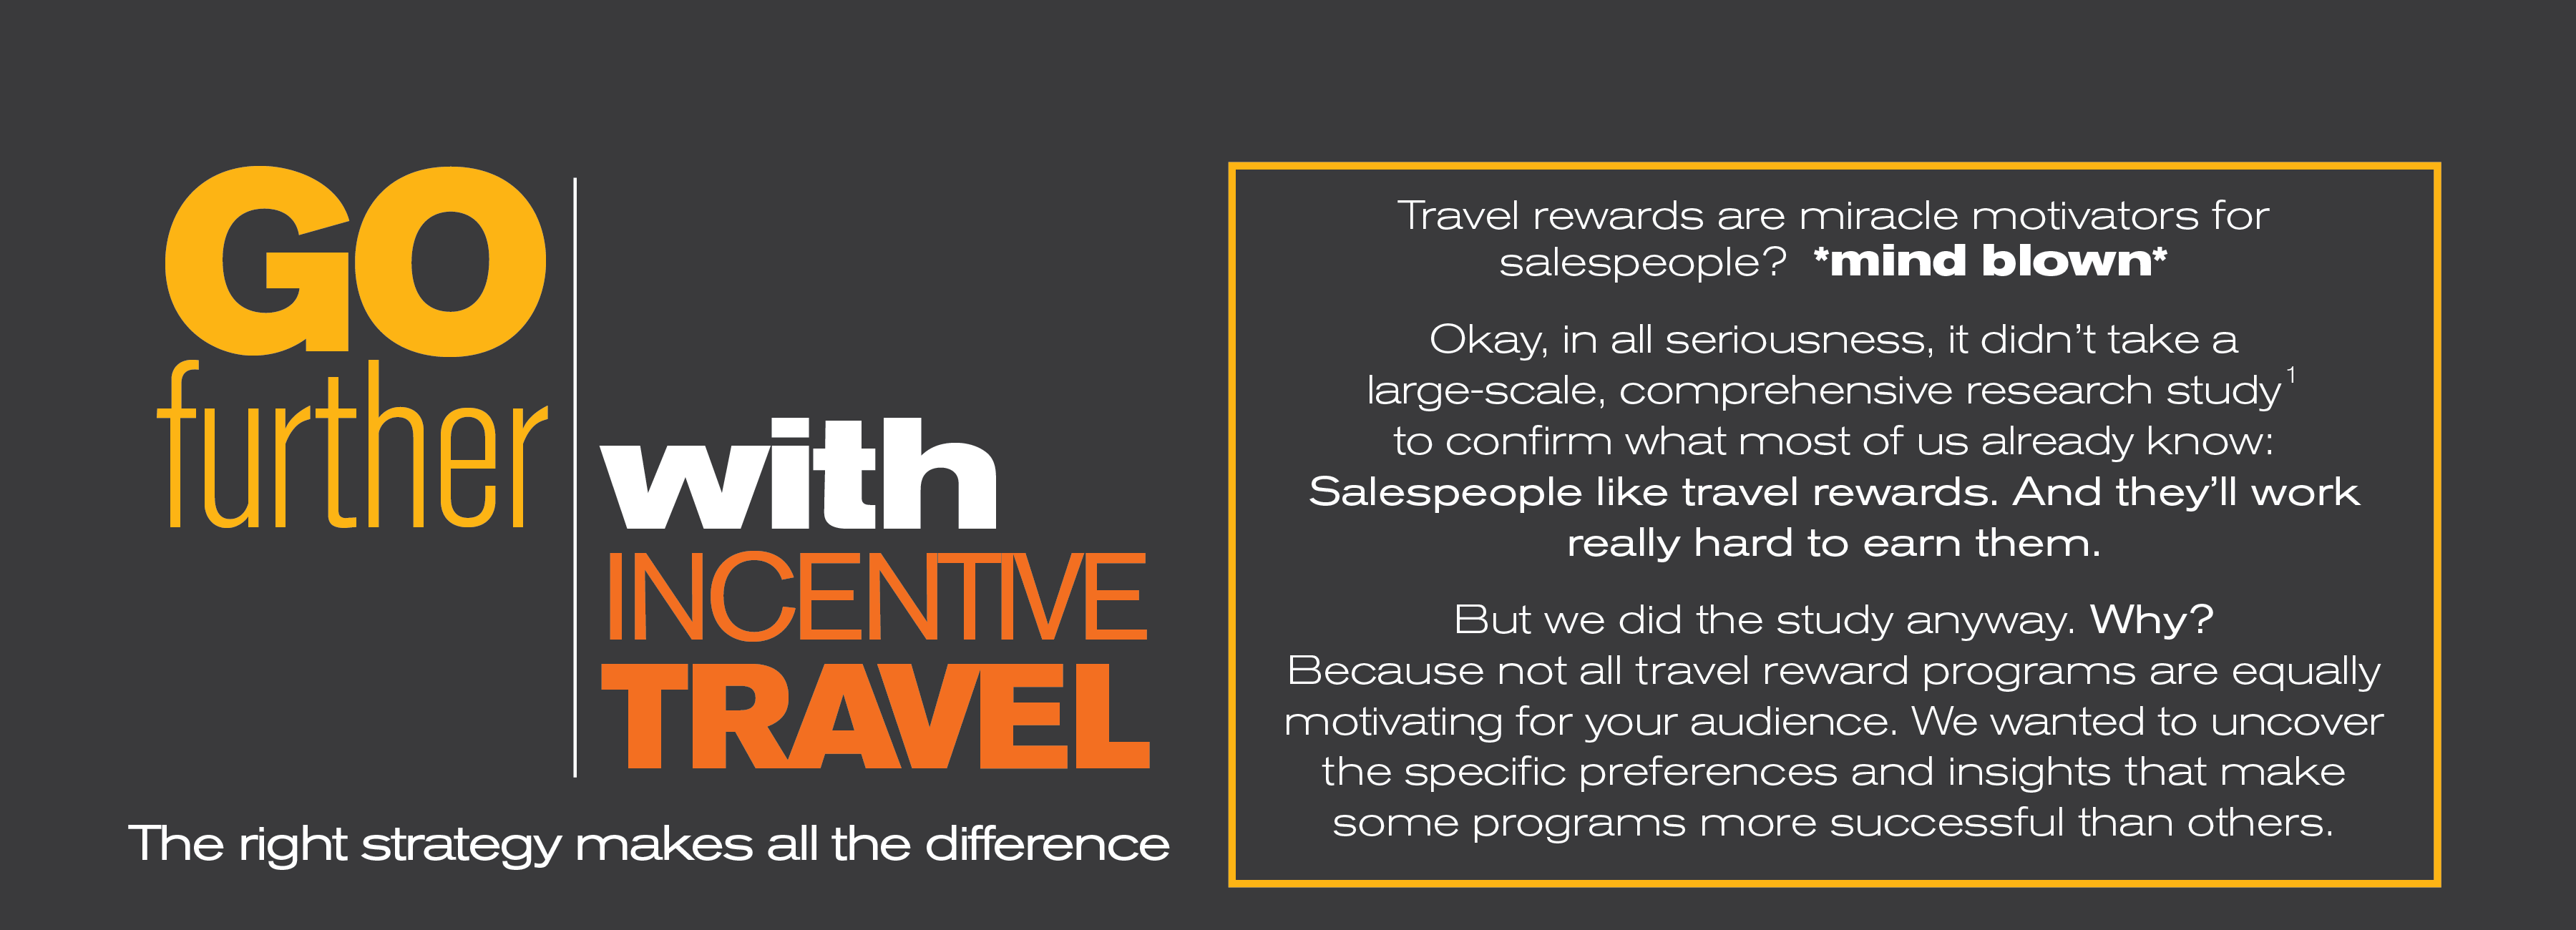 travel rewards study infographic